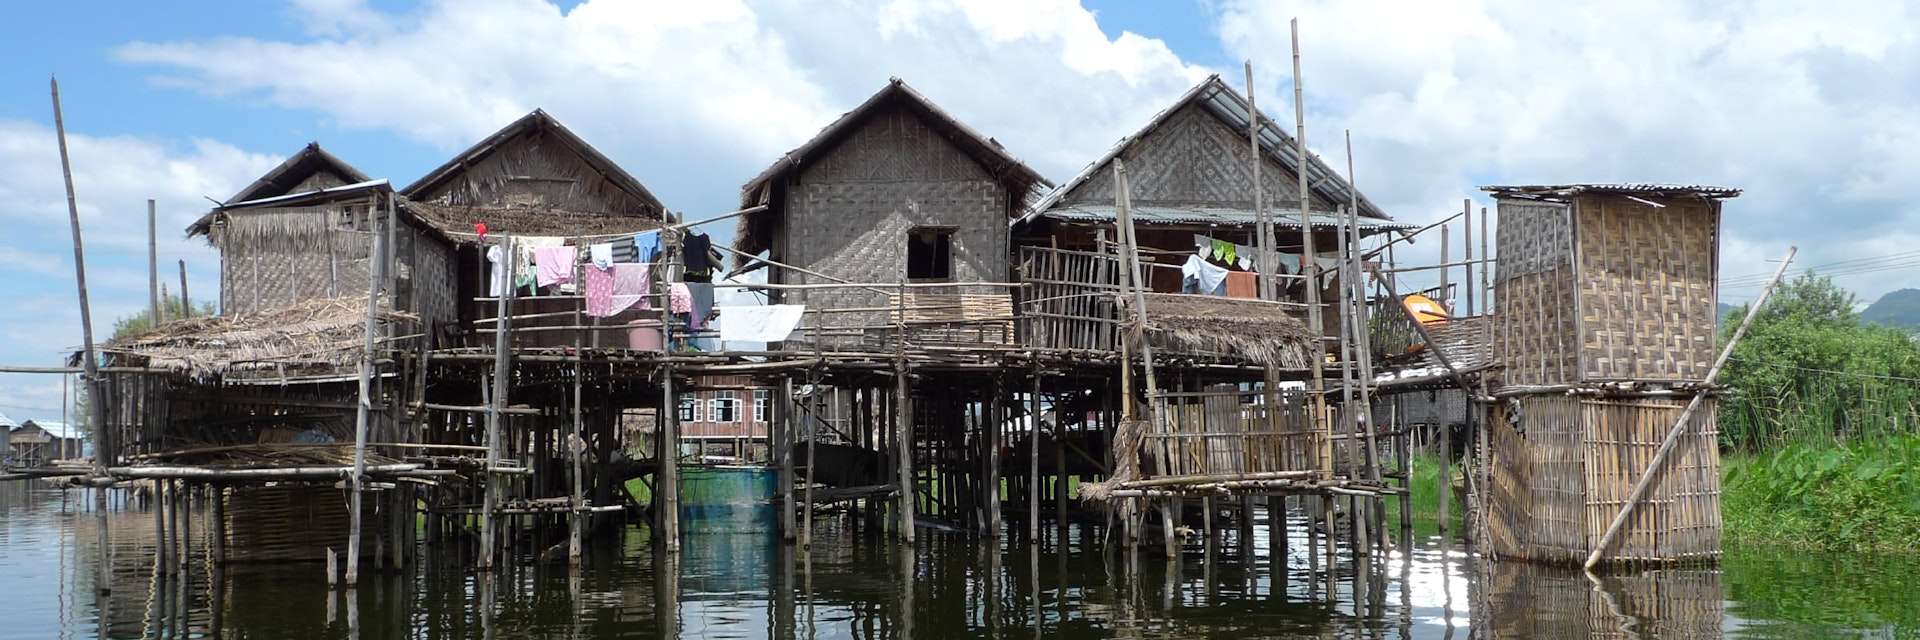 View of stilt houses in Nampan Village, Inle Lake